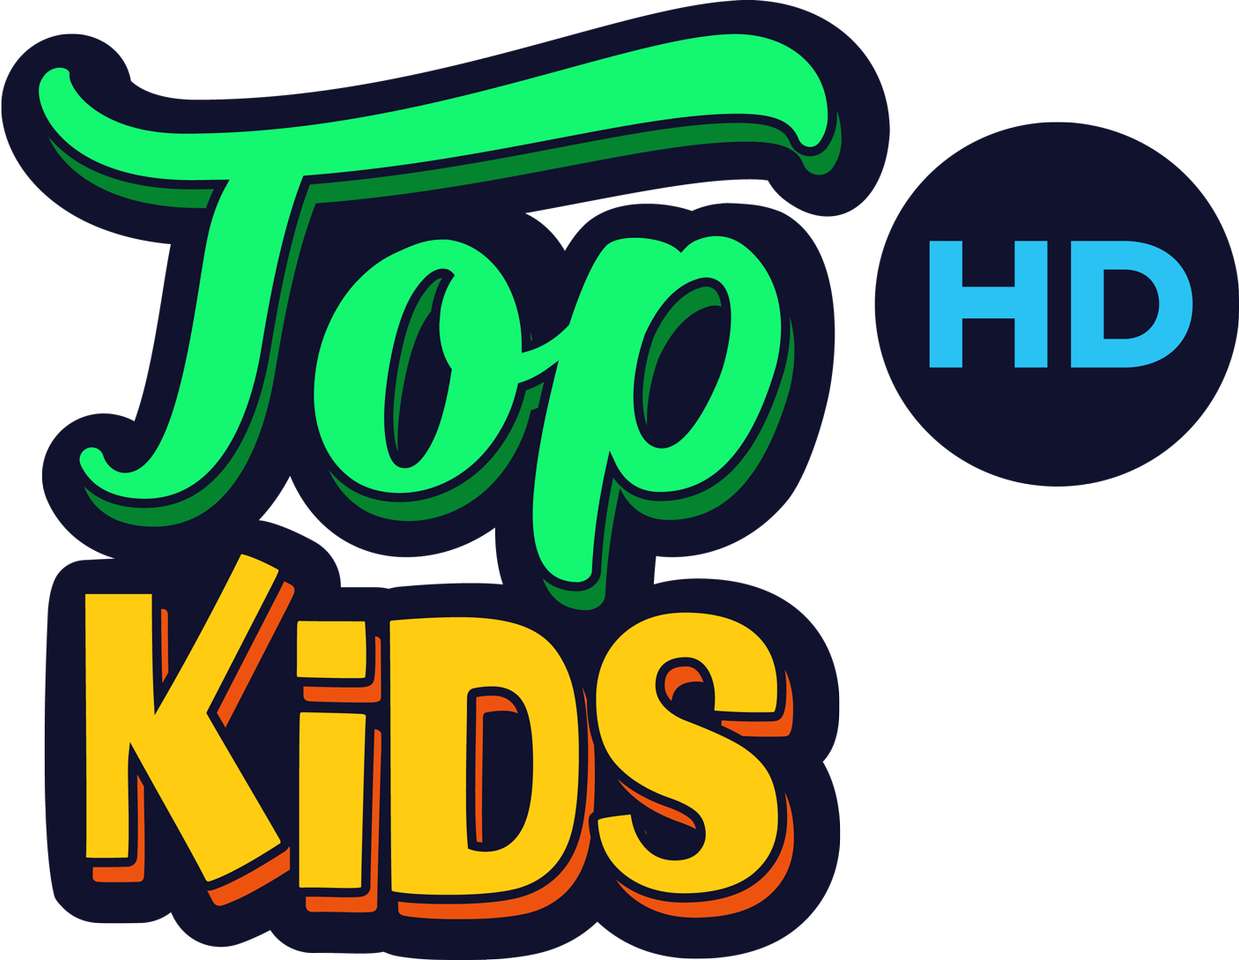 Top Kids Logo Puzzle jigsaw puzzle online